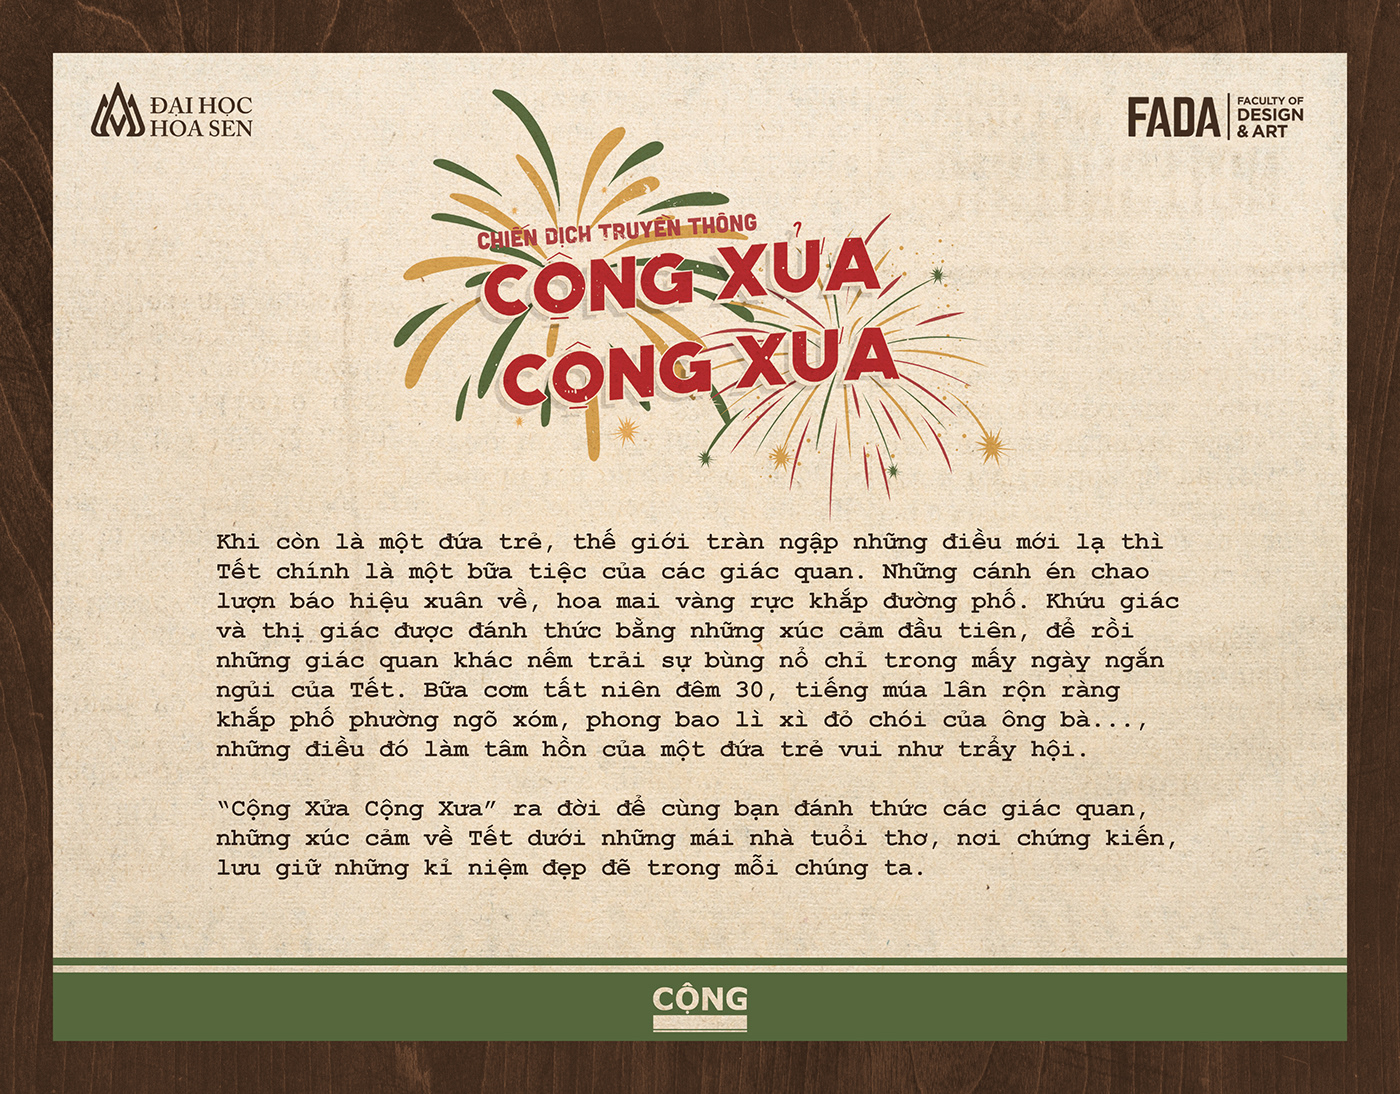 ads communication design Holiday Lunar New Year saigon tet vietnam